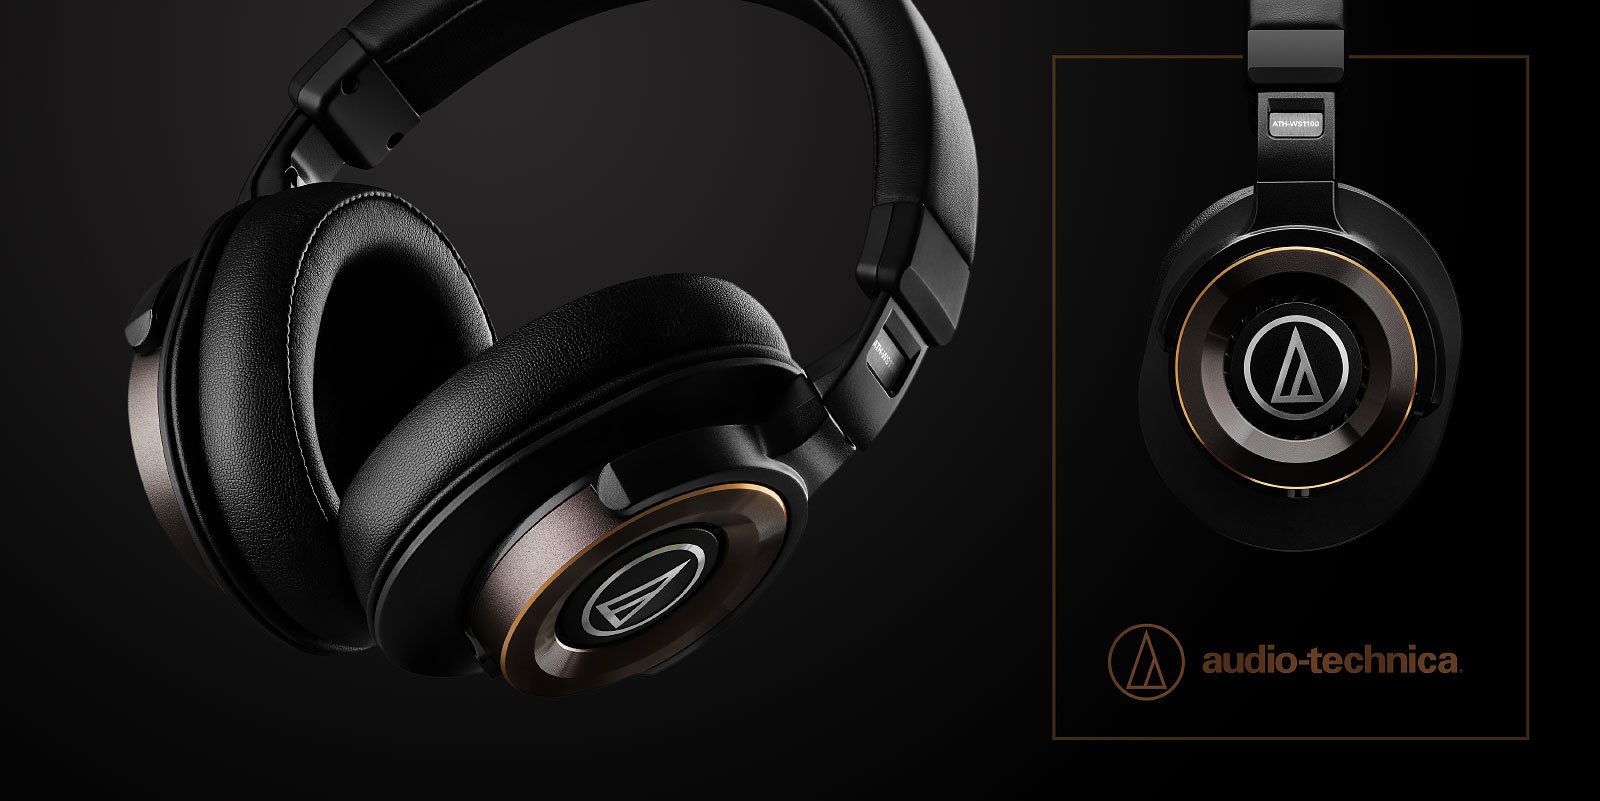 Audio-Technica headphones headset advertising photo on black background